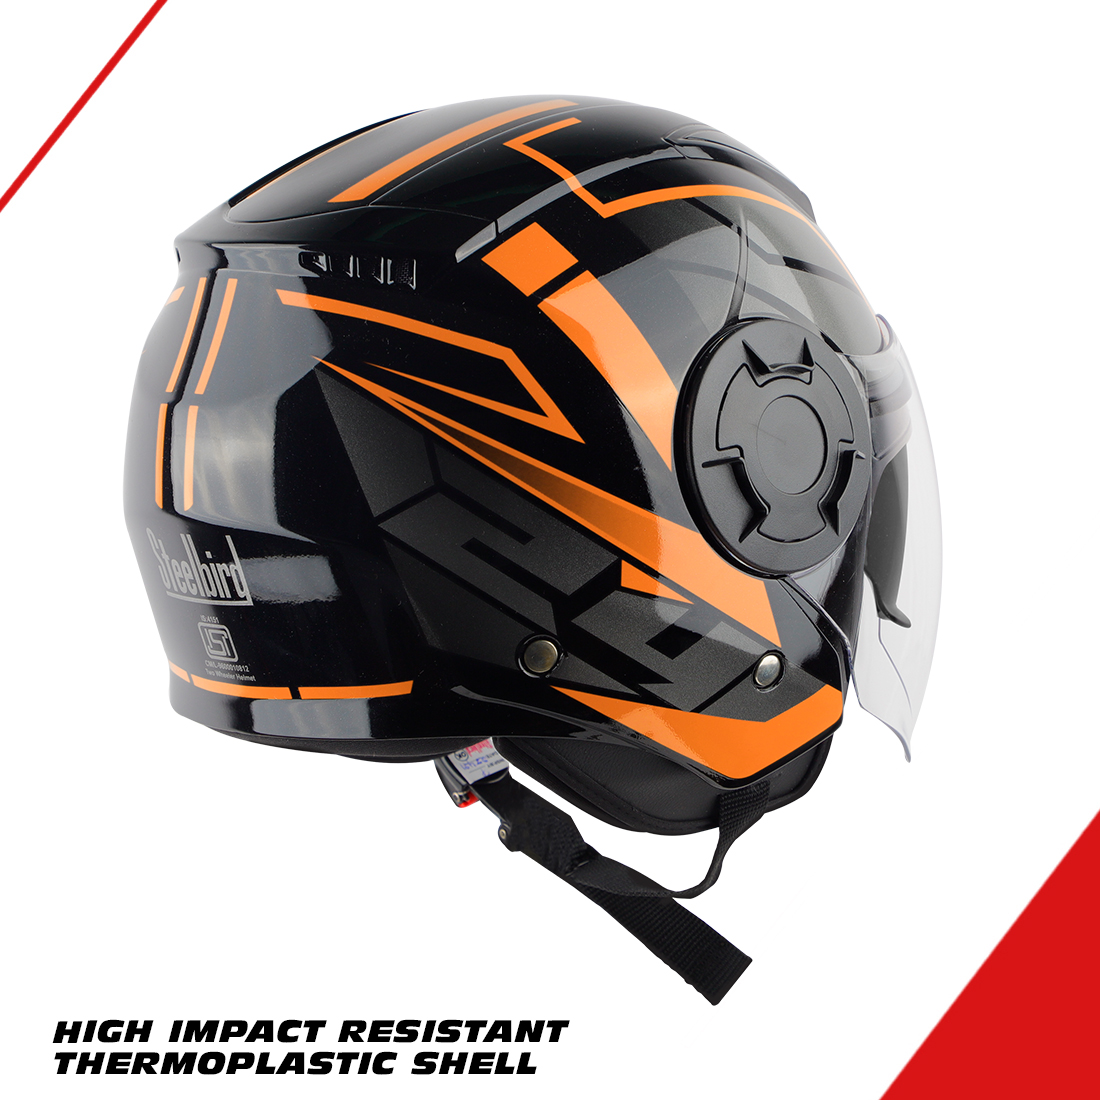 Steelbird SBH-31 Baron 24 ISI Certified Open Face Helmet For Men And Women With Inner Sun Shield(Dual Visor Mechanism) (Glossy Black Orange)